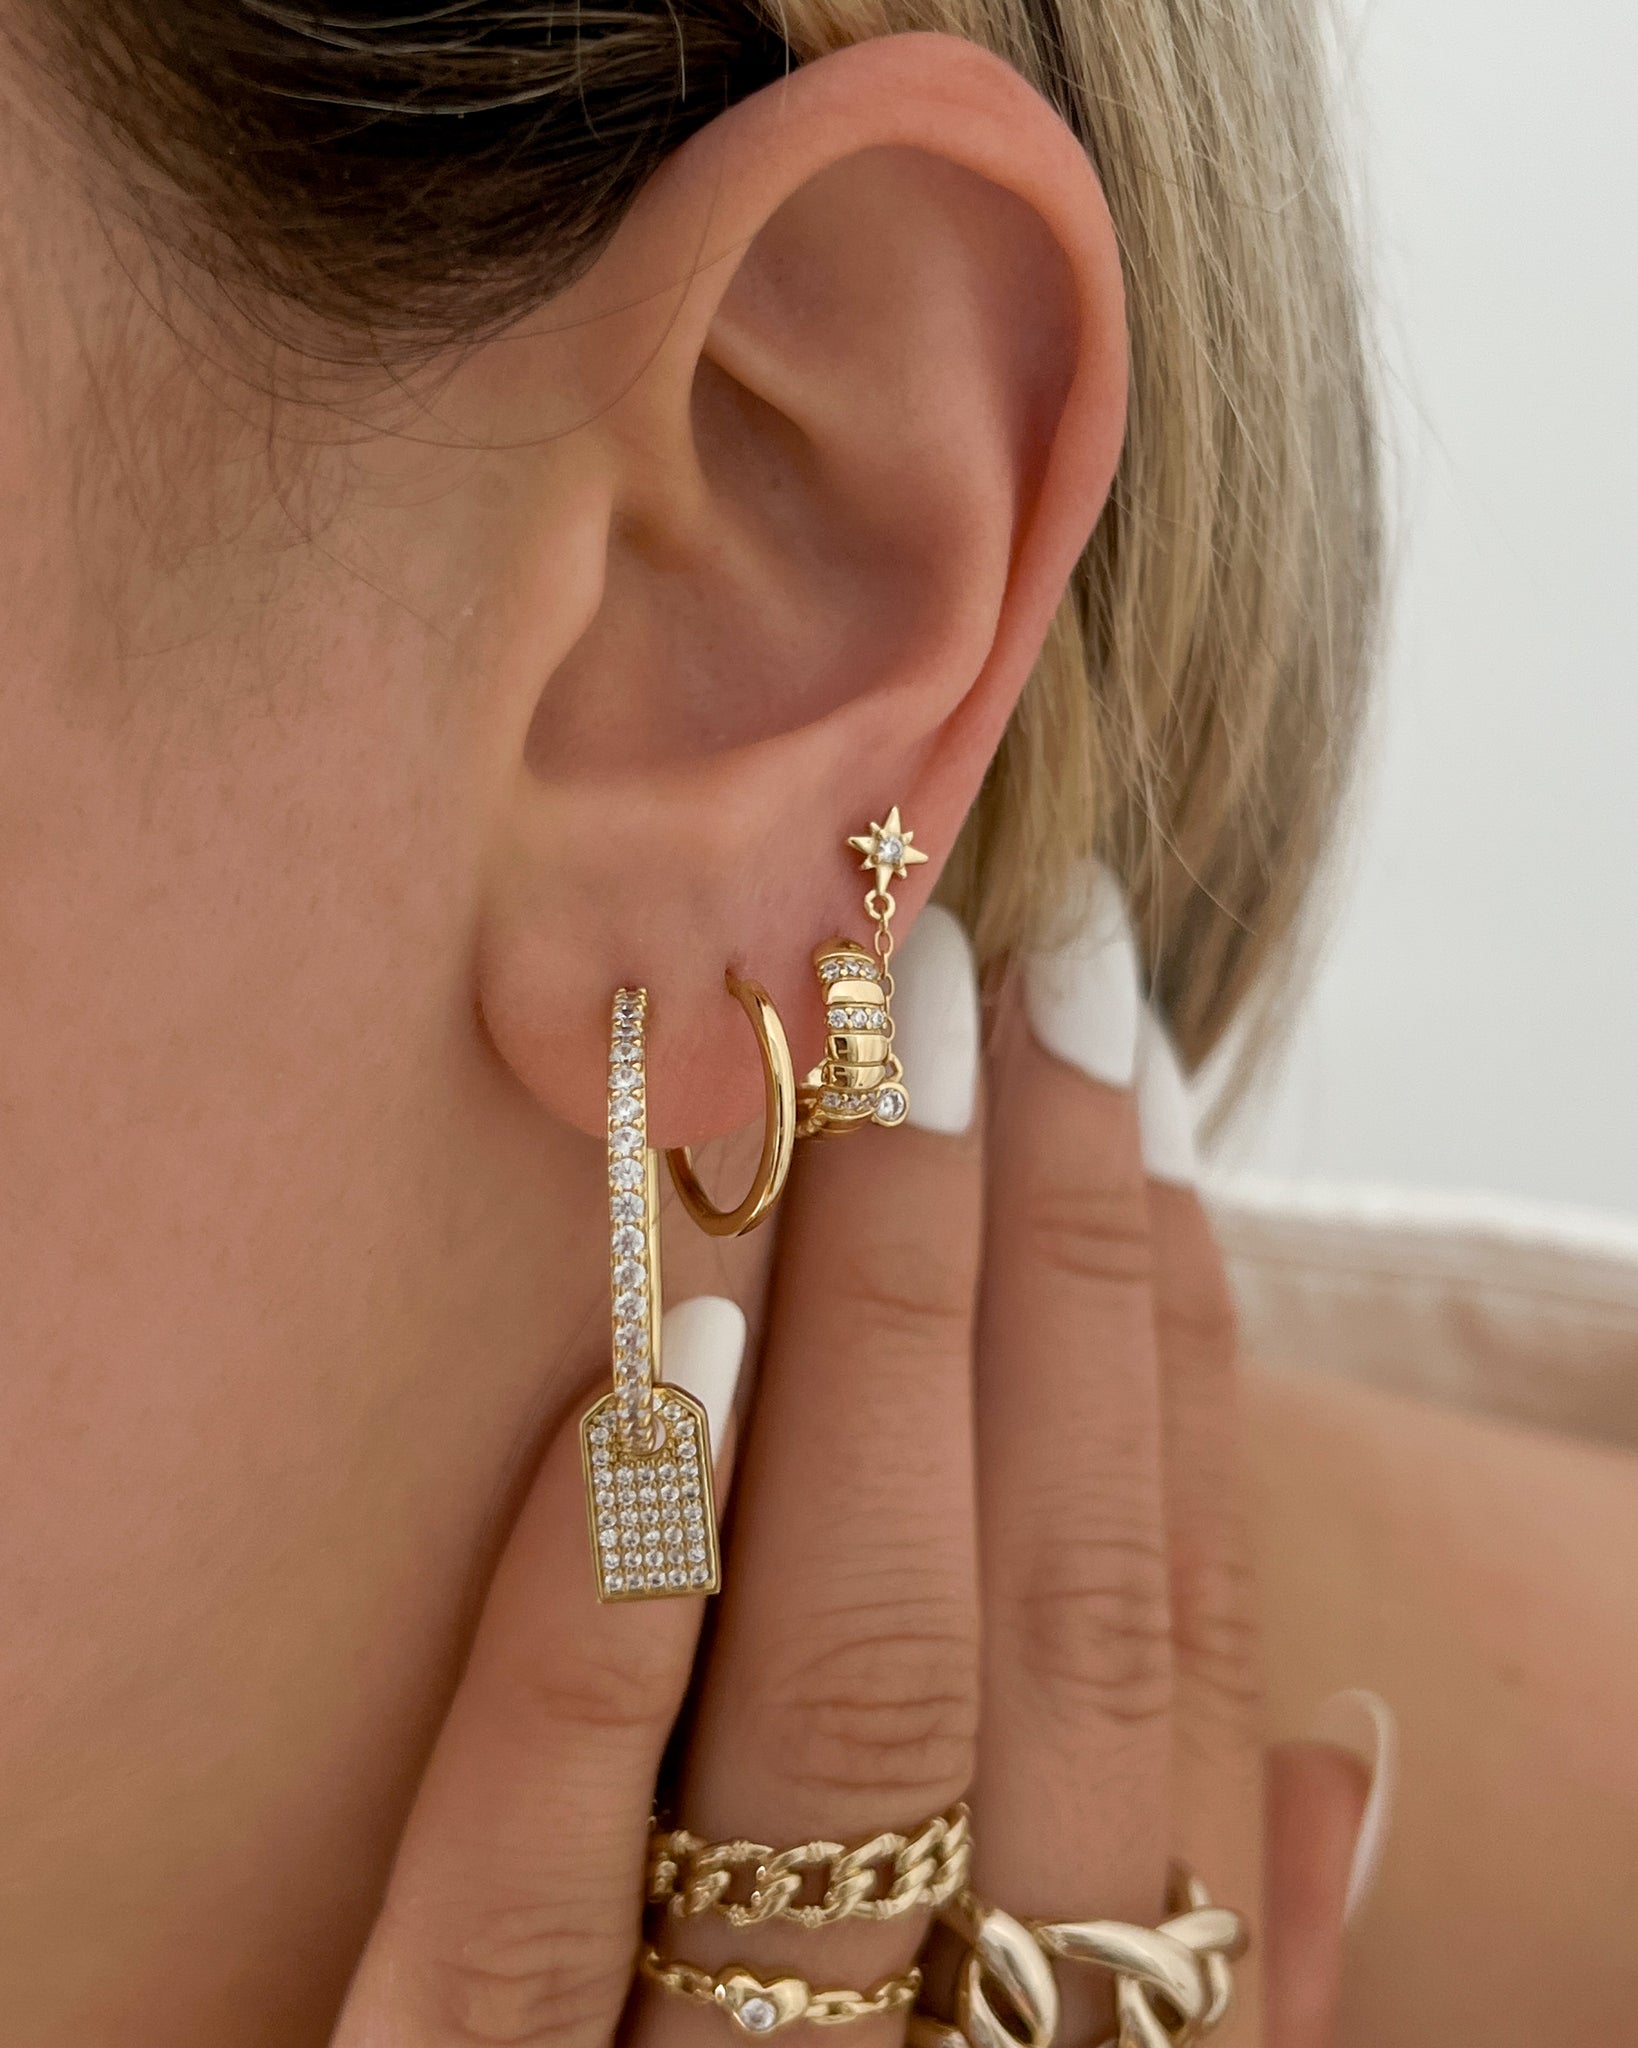 Mary Jane earrings